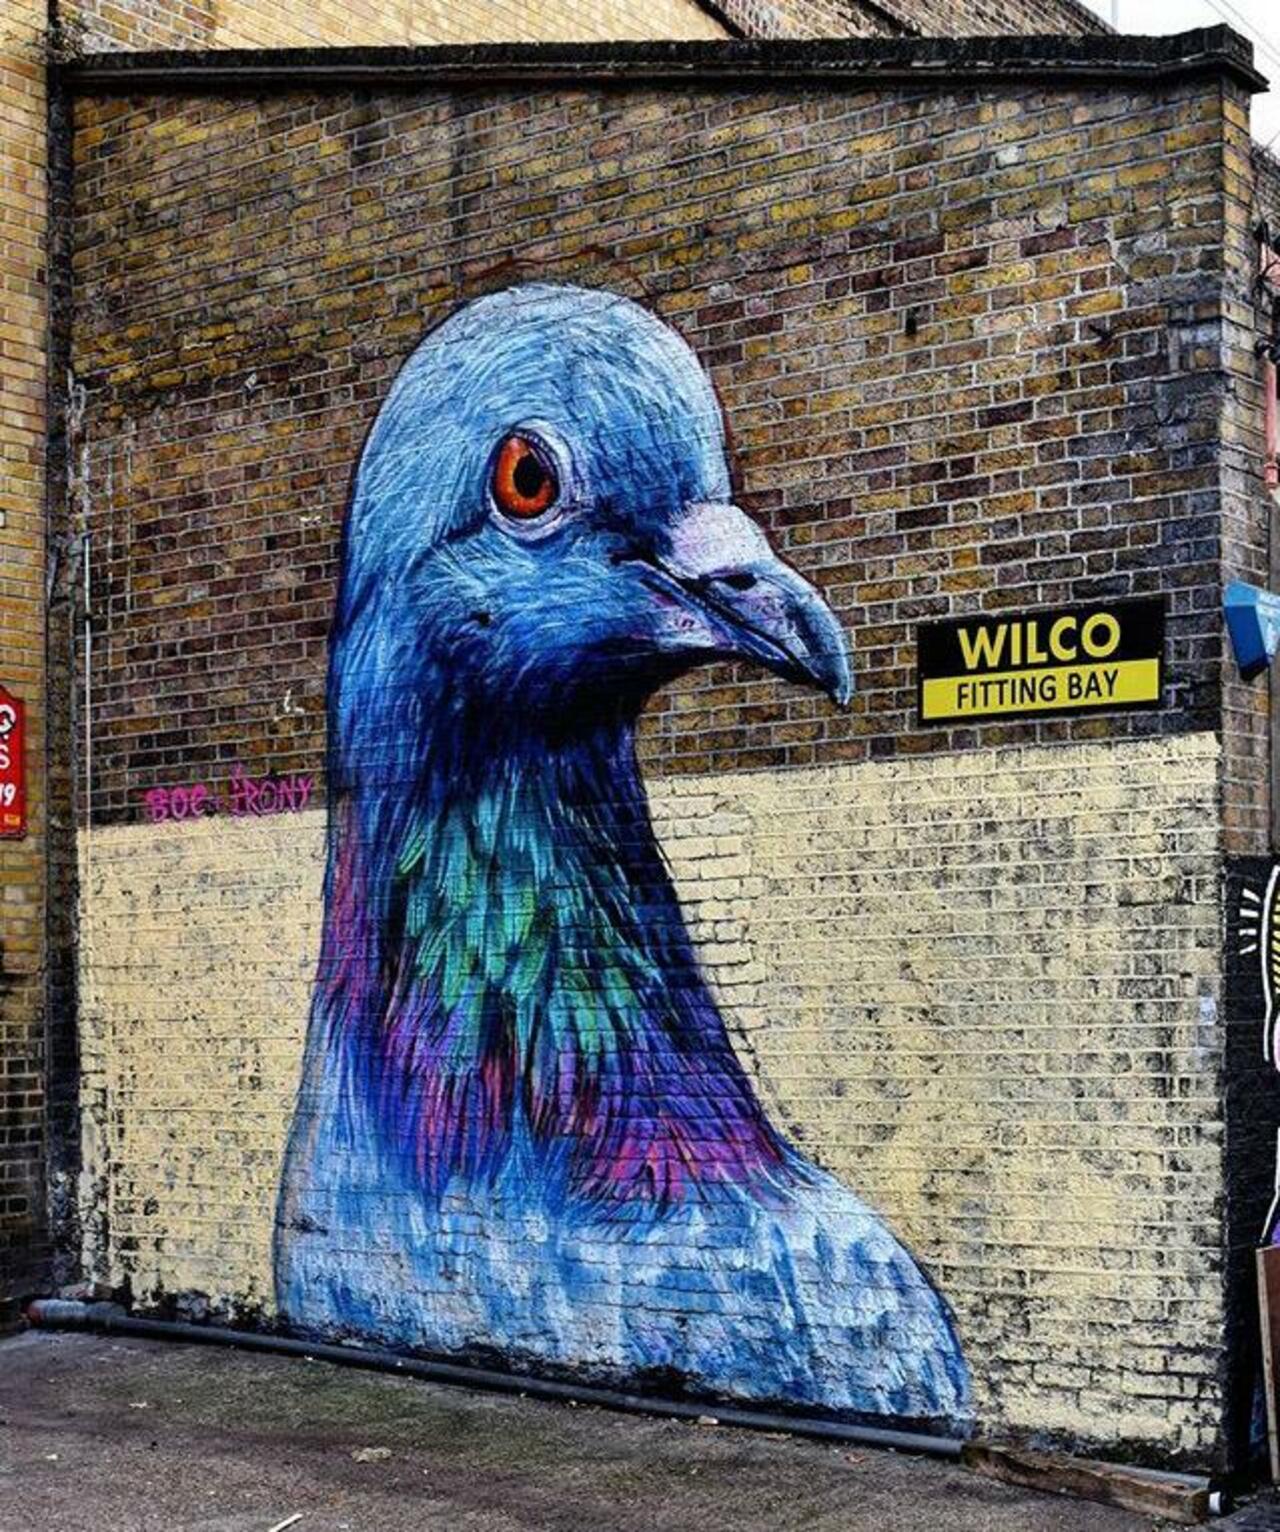 Street Art by Placee Boe & whoamirony in London 

#art #graffiti #mural #streetart http://t.co/tAQf4ps0RS